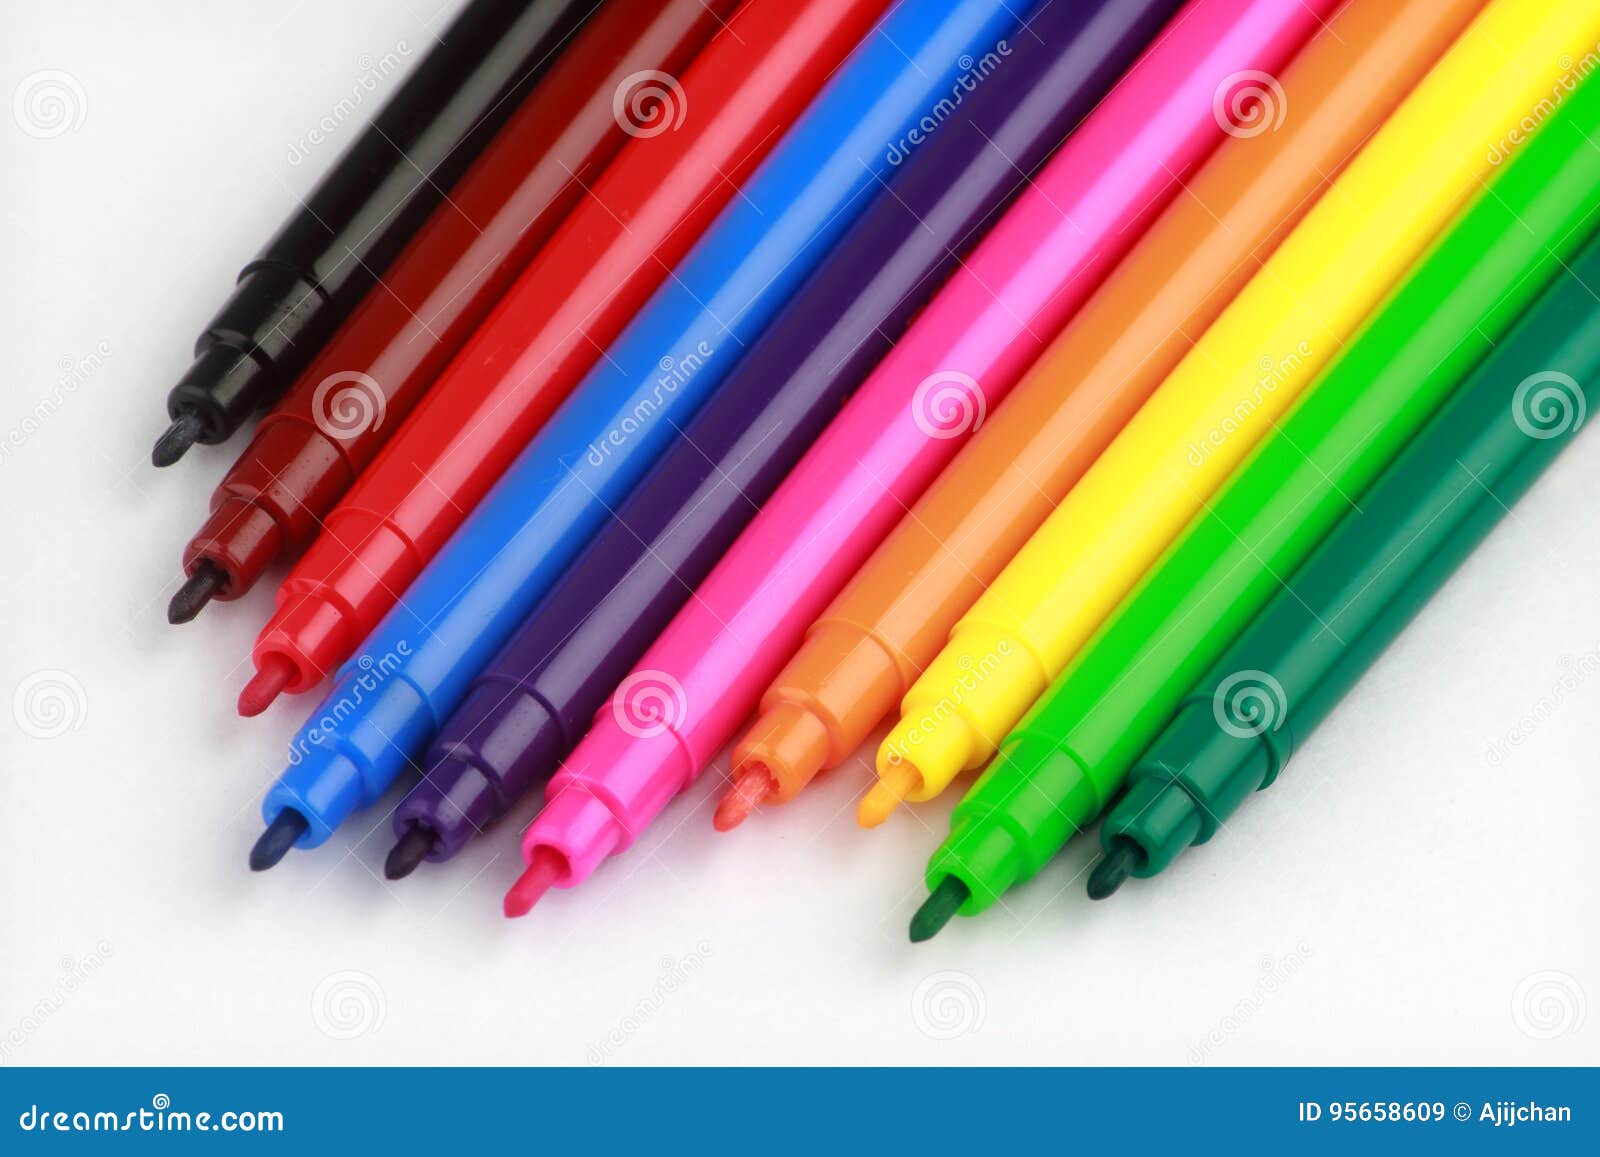 Sketch pens stock image. Image of print, colorscheme - 95658609